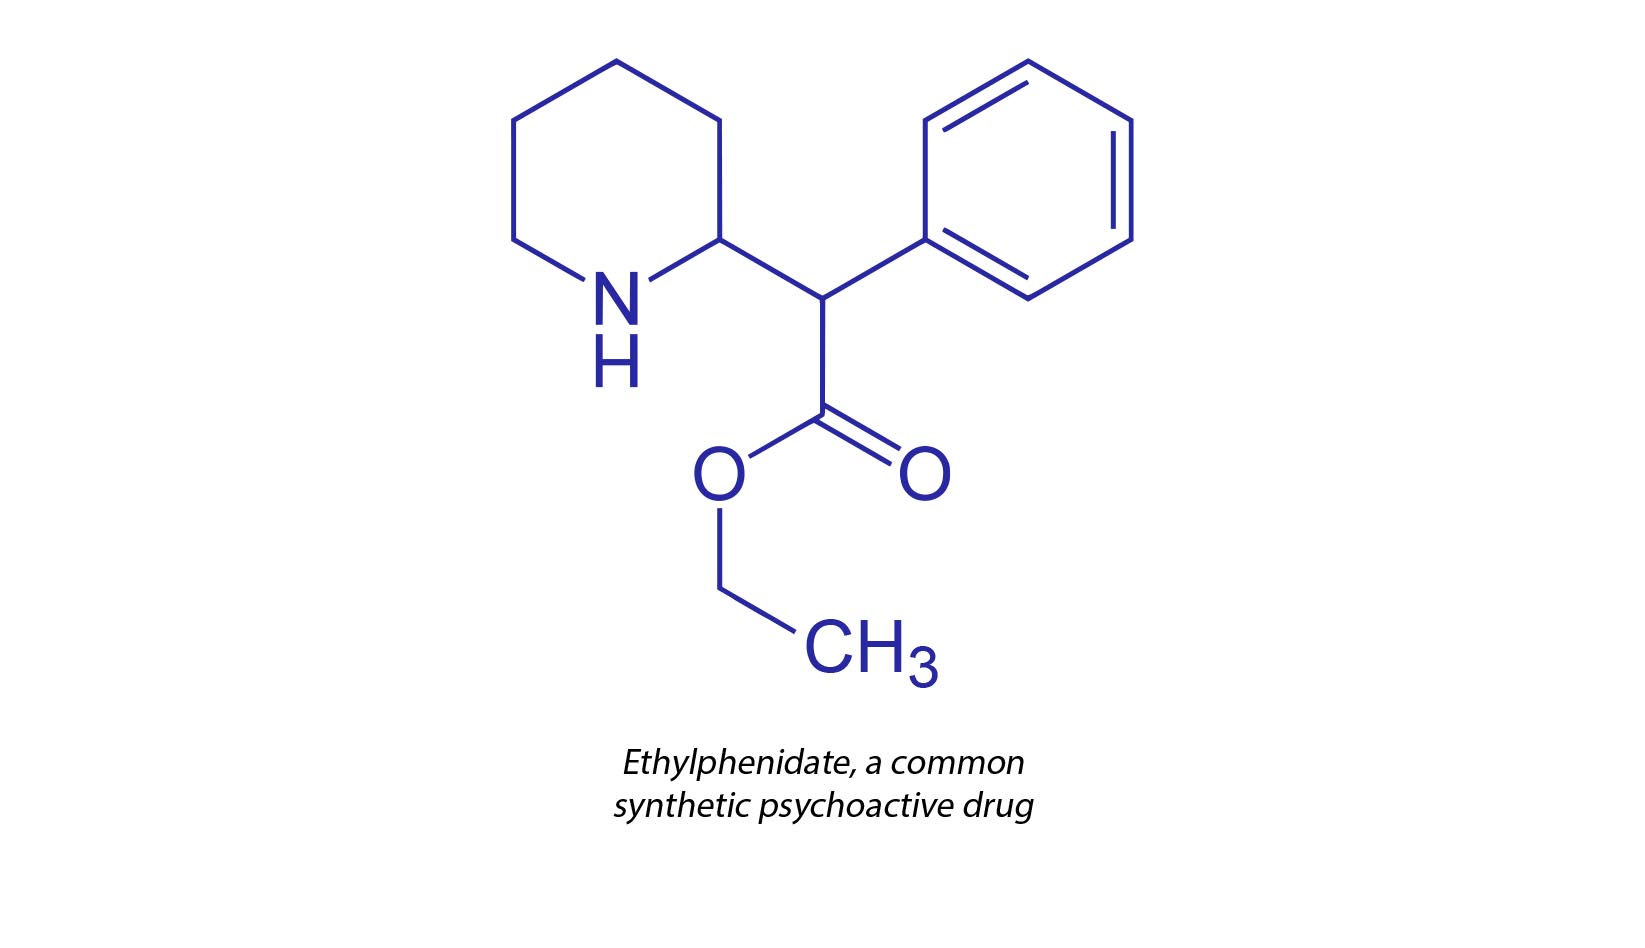 ethylphenidate, a common synthetic psychoactive drug